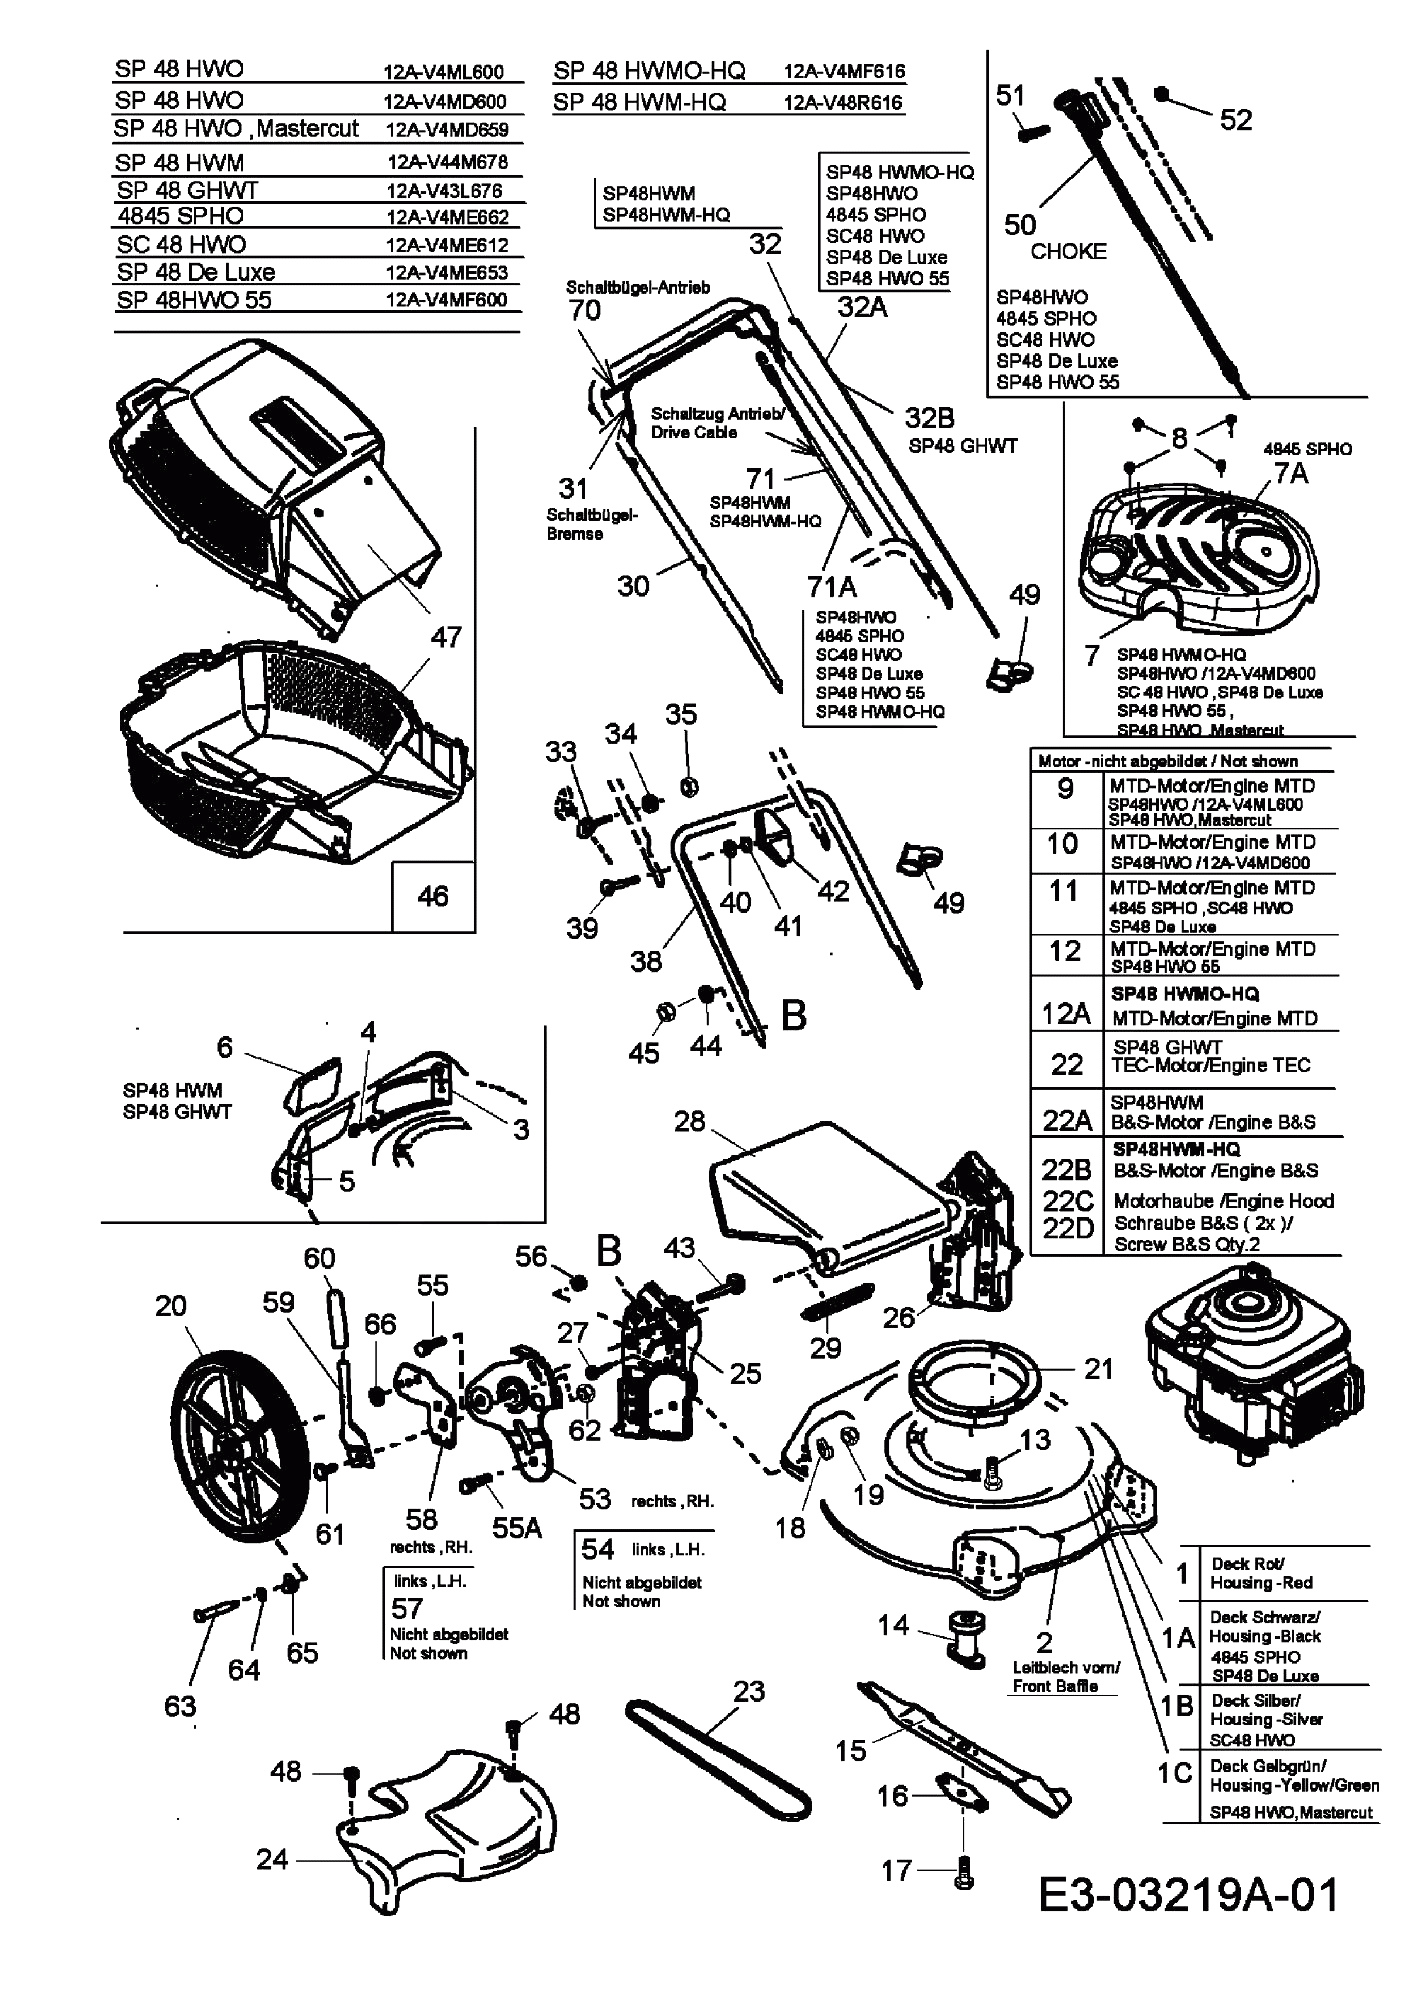 MTD Артикул 12A-V4ME653 (год выпуска 2007). Основная деталировка